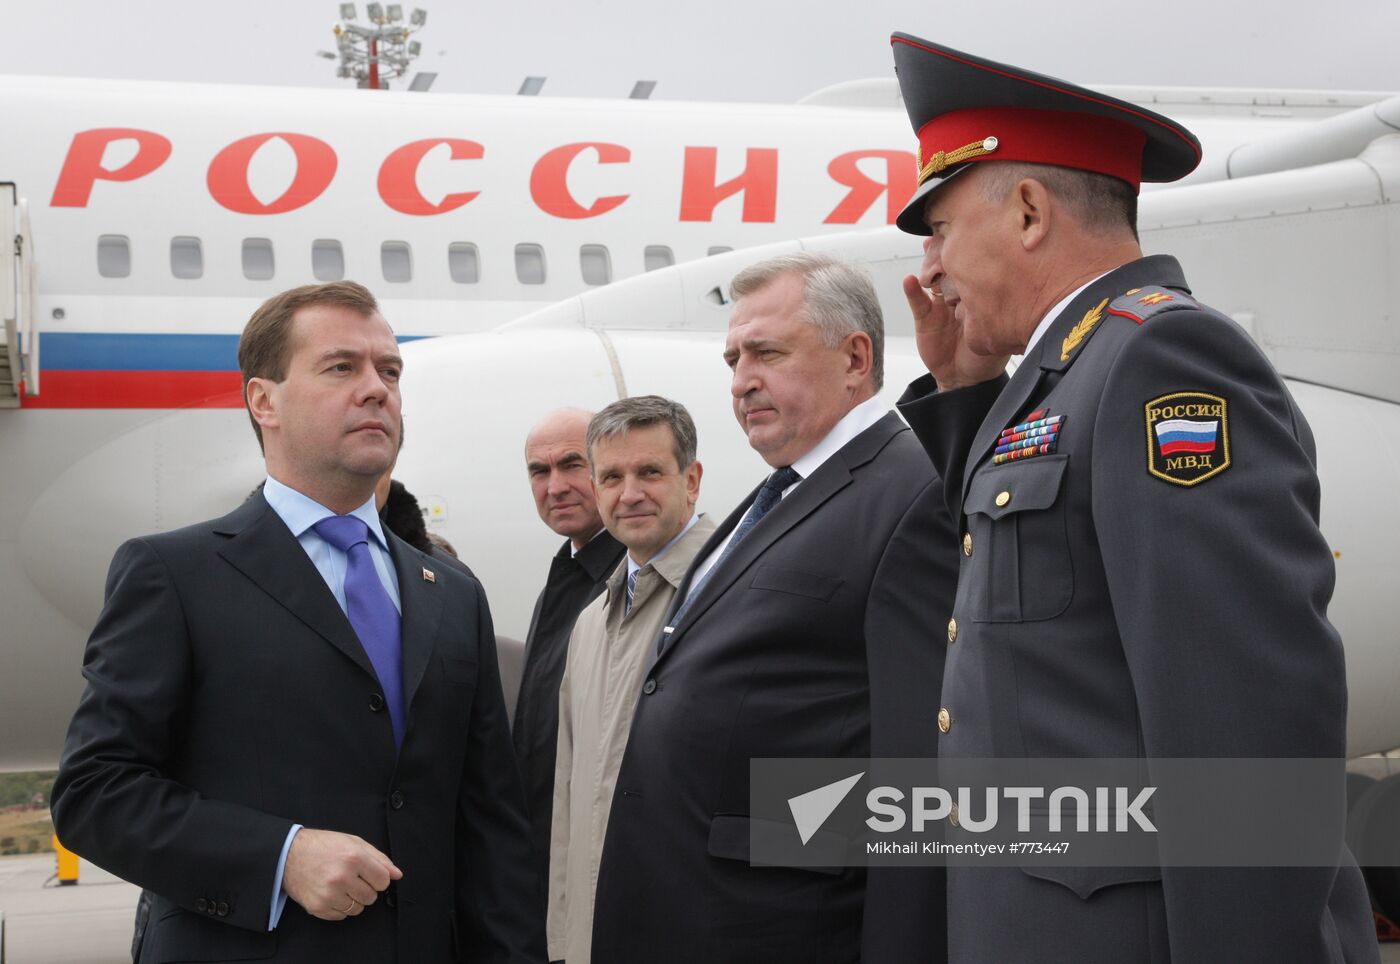 Dmitry Medvedev on working visit to Gelendzhik